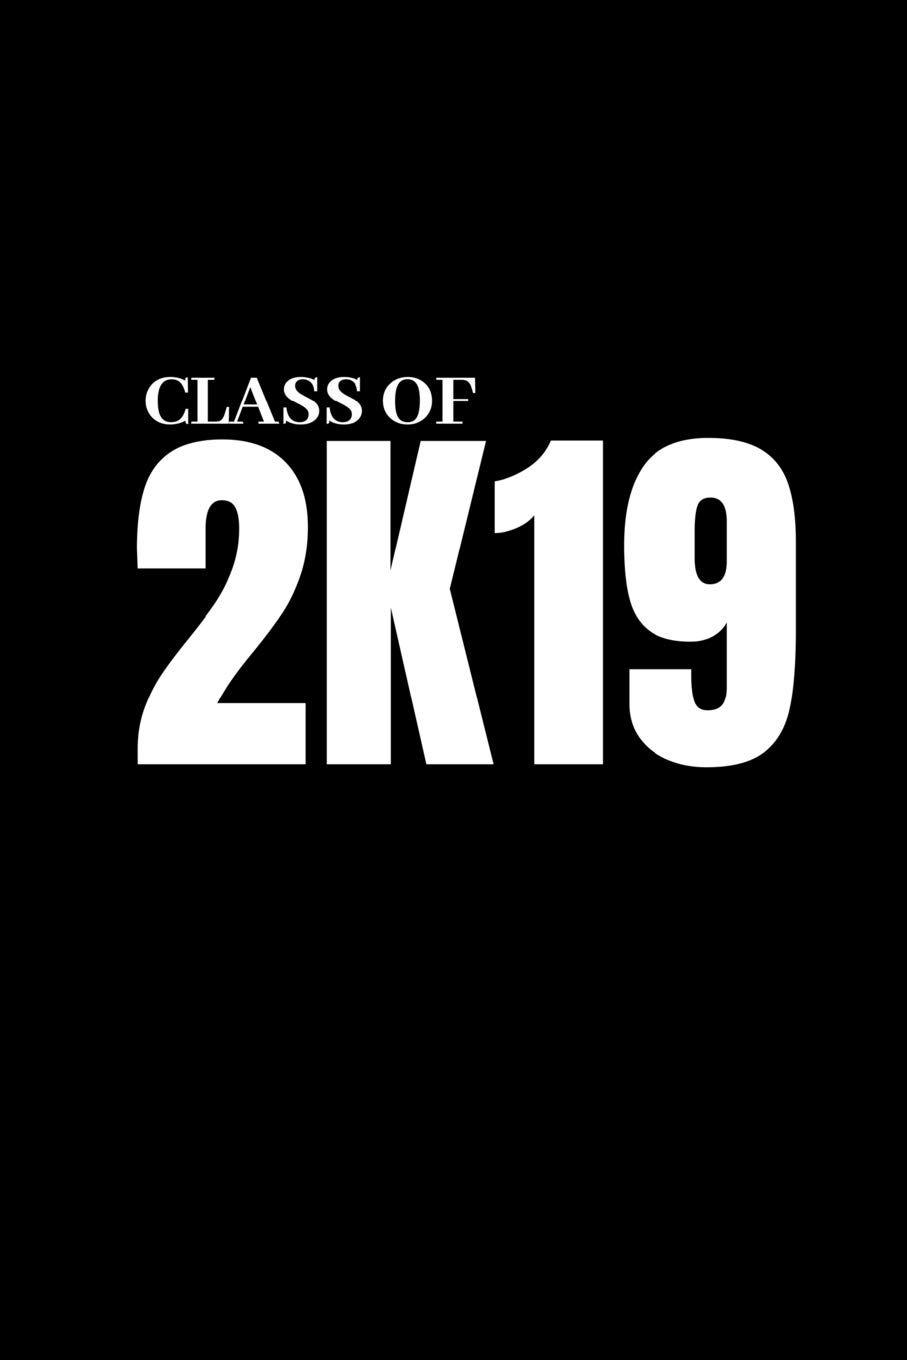 2K19 Logo - Amazon.com: Class of 2K19: Senior Year of High School Notebook ...